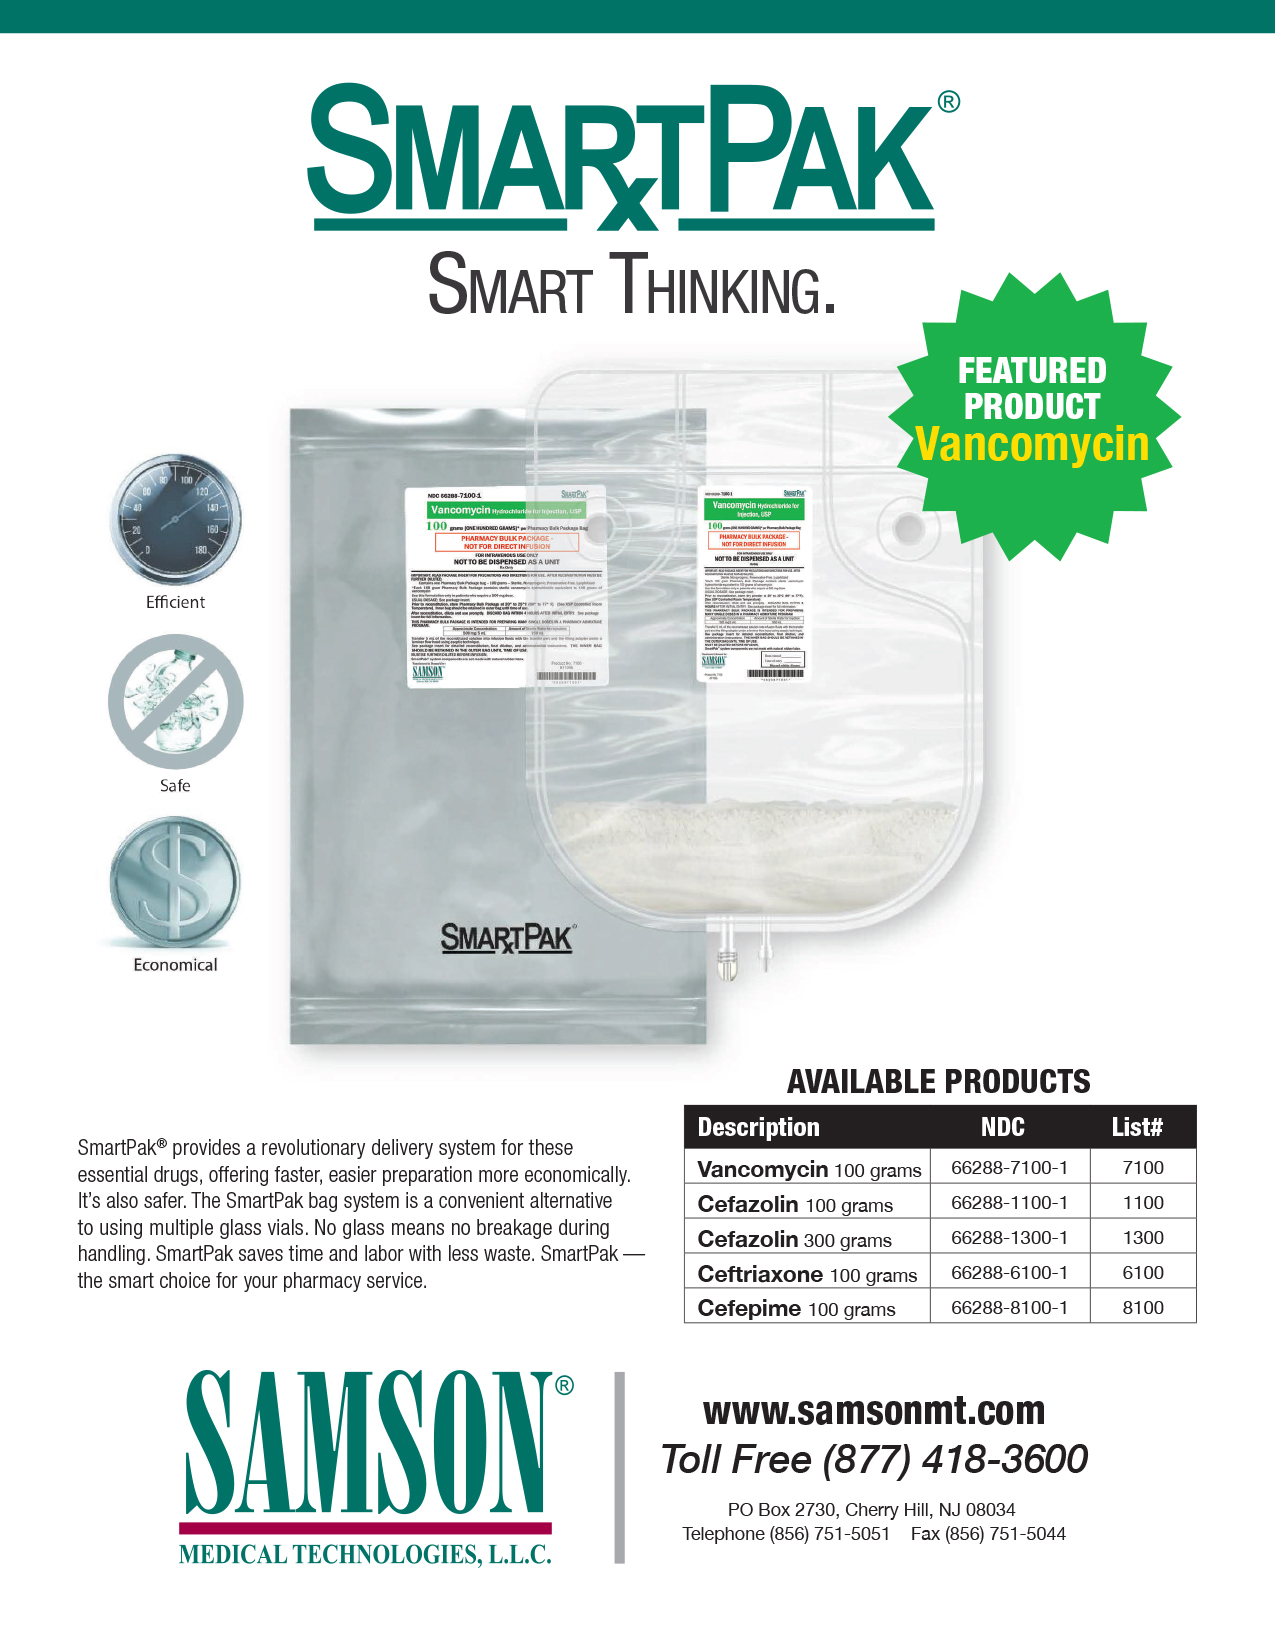 Samson Medical Technologies